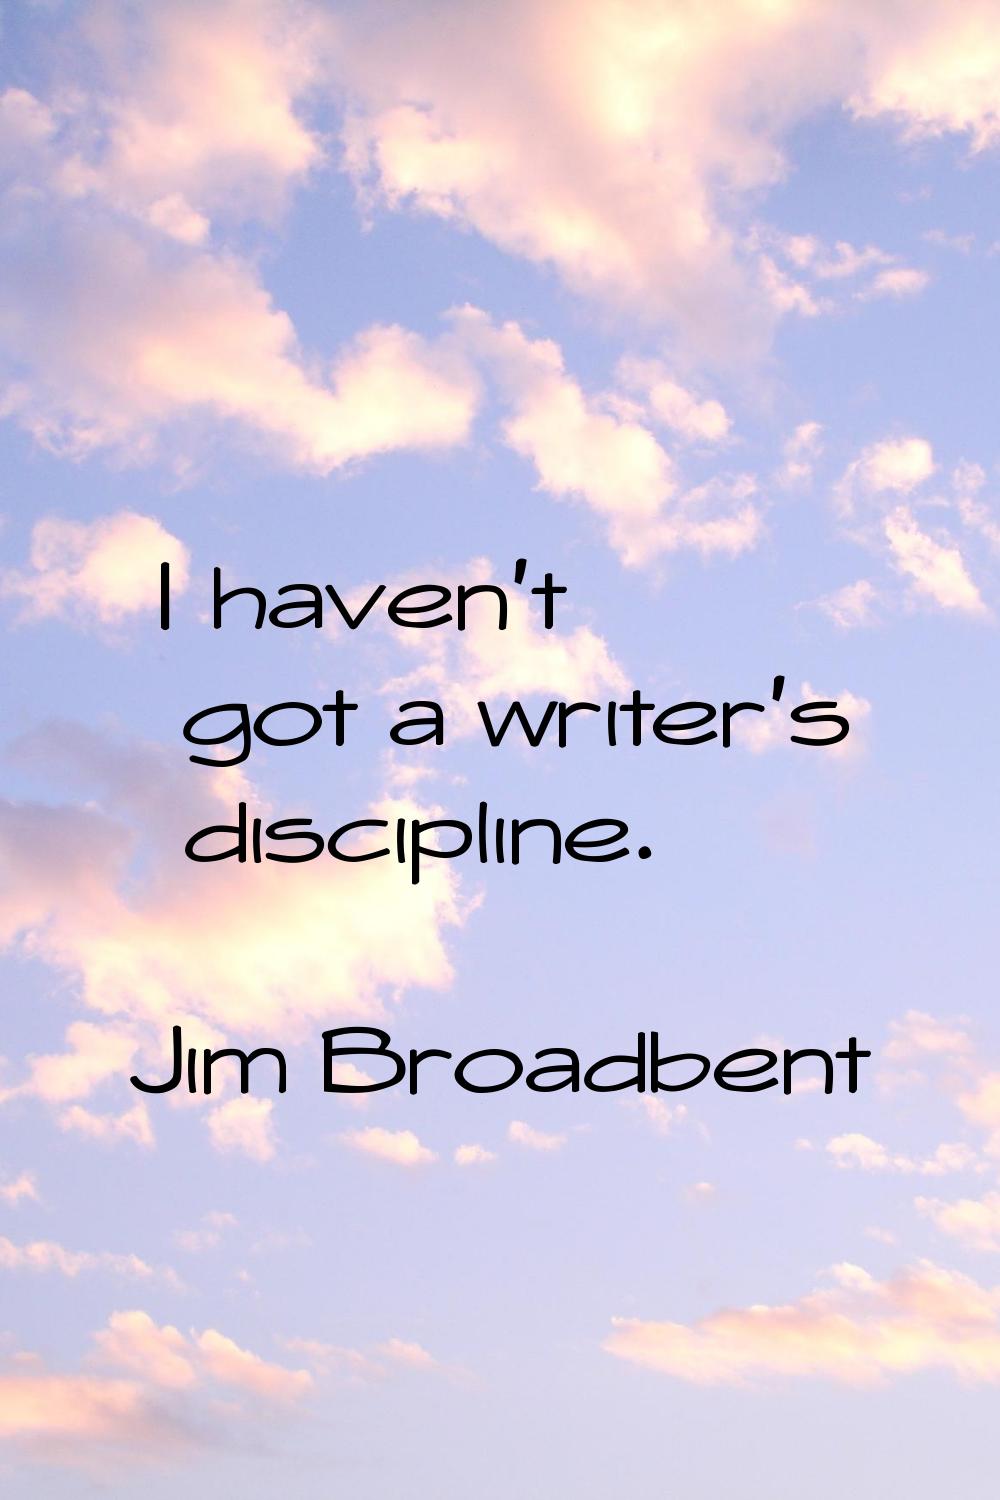 I haven't got a writer's discipline.